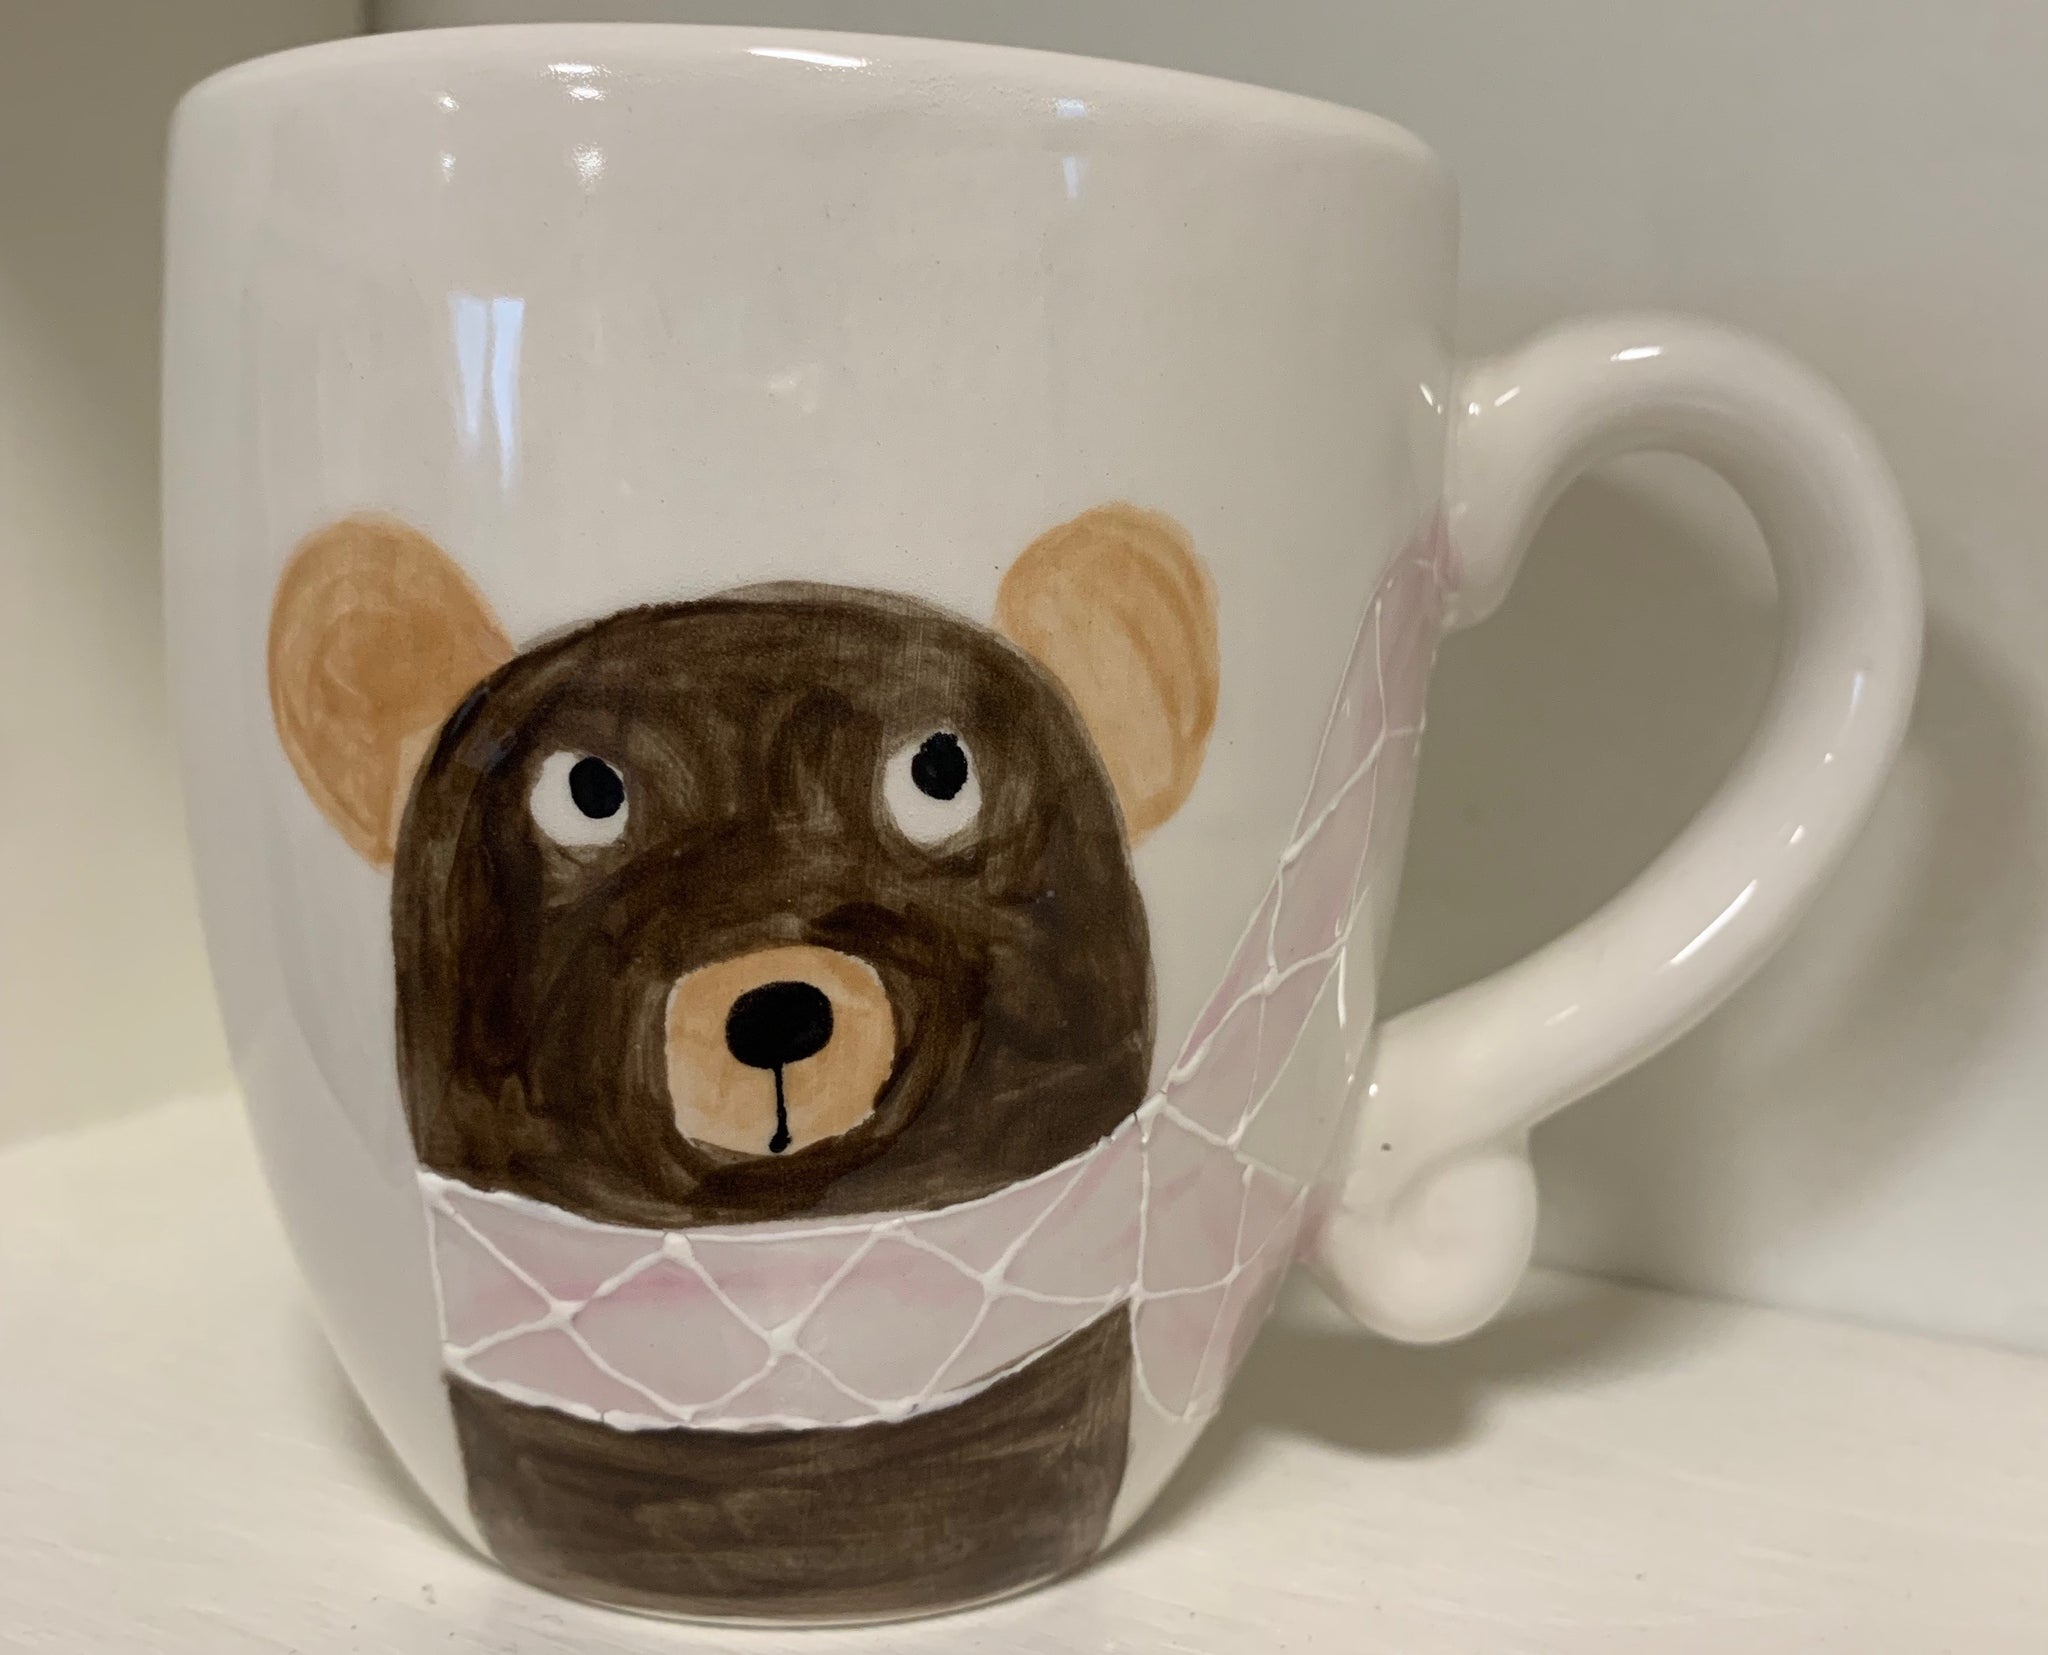 Mug "Brown bear with pink scarf"